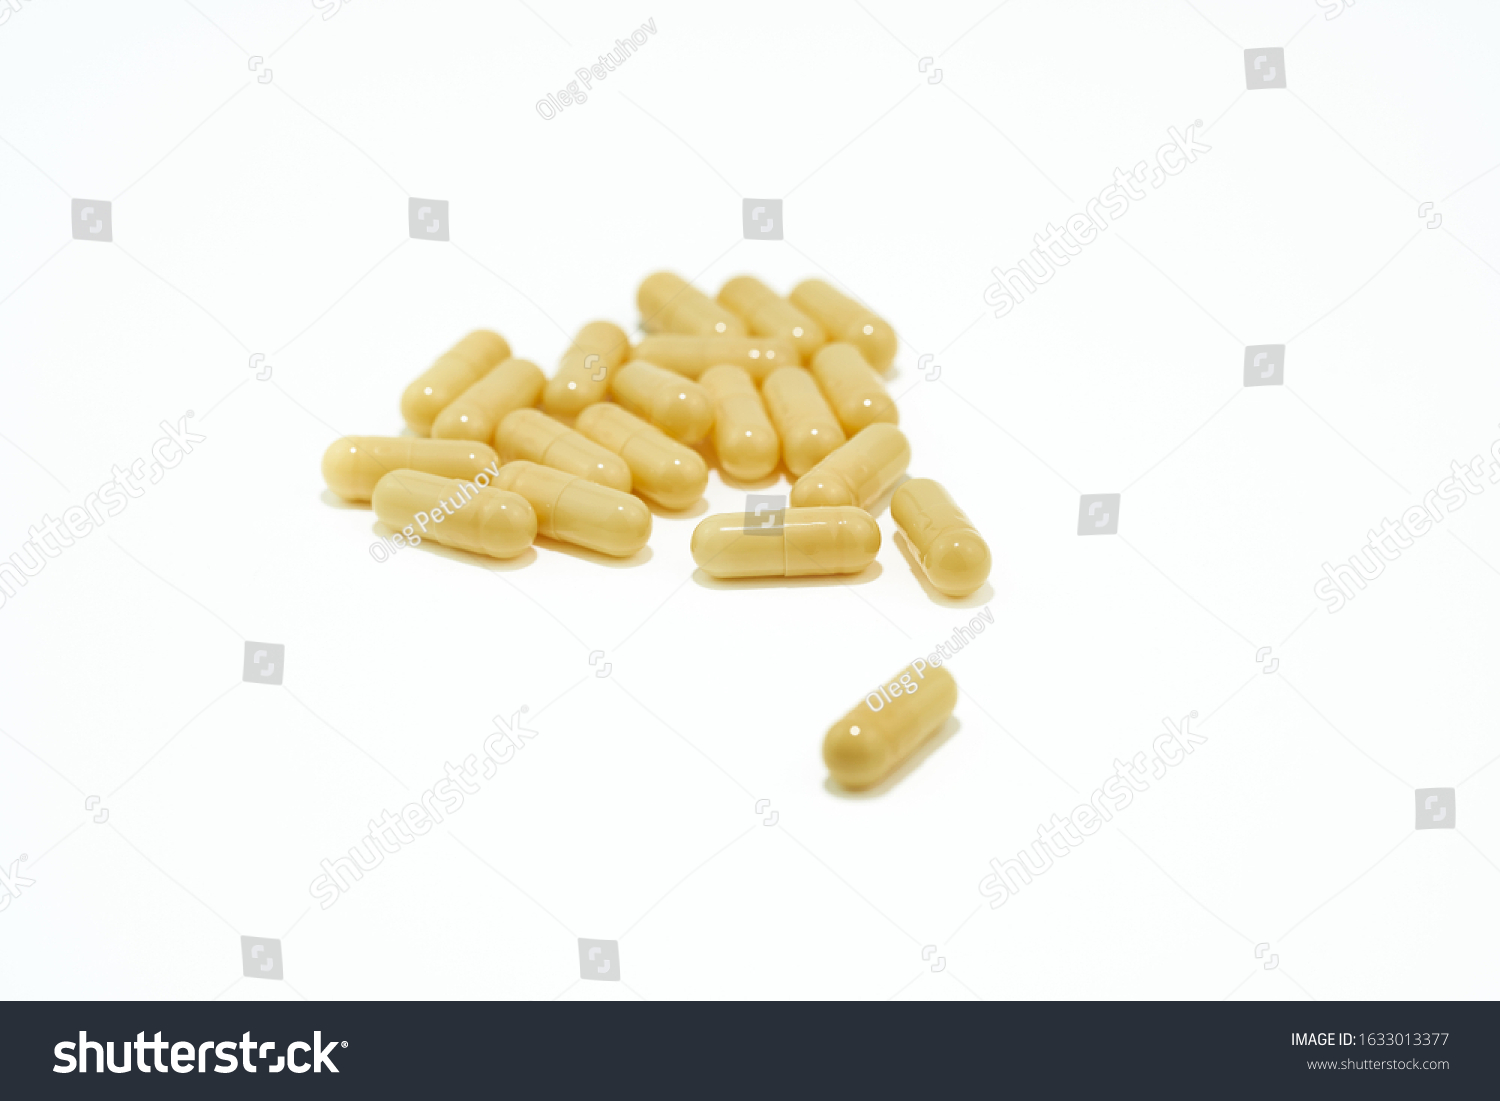 Yellow pills an pill bottle on white background. #1633013377